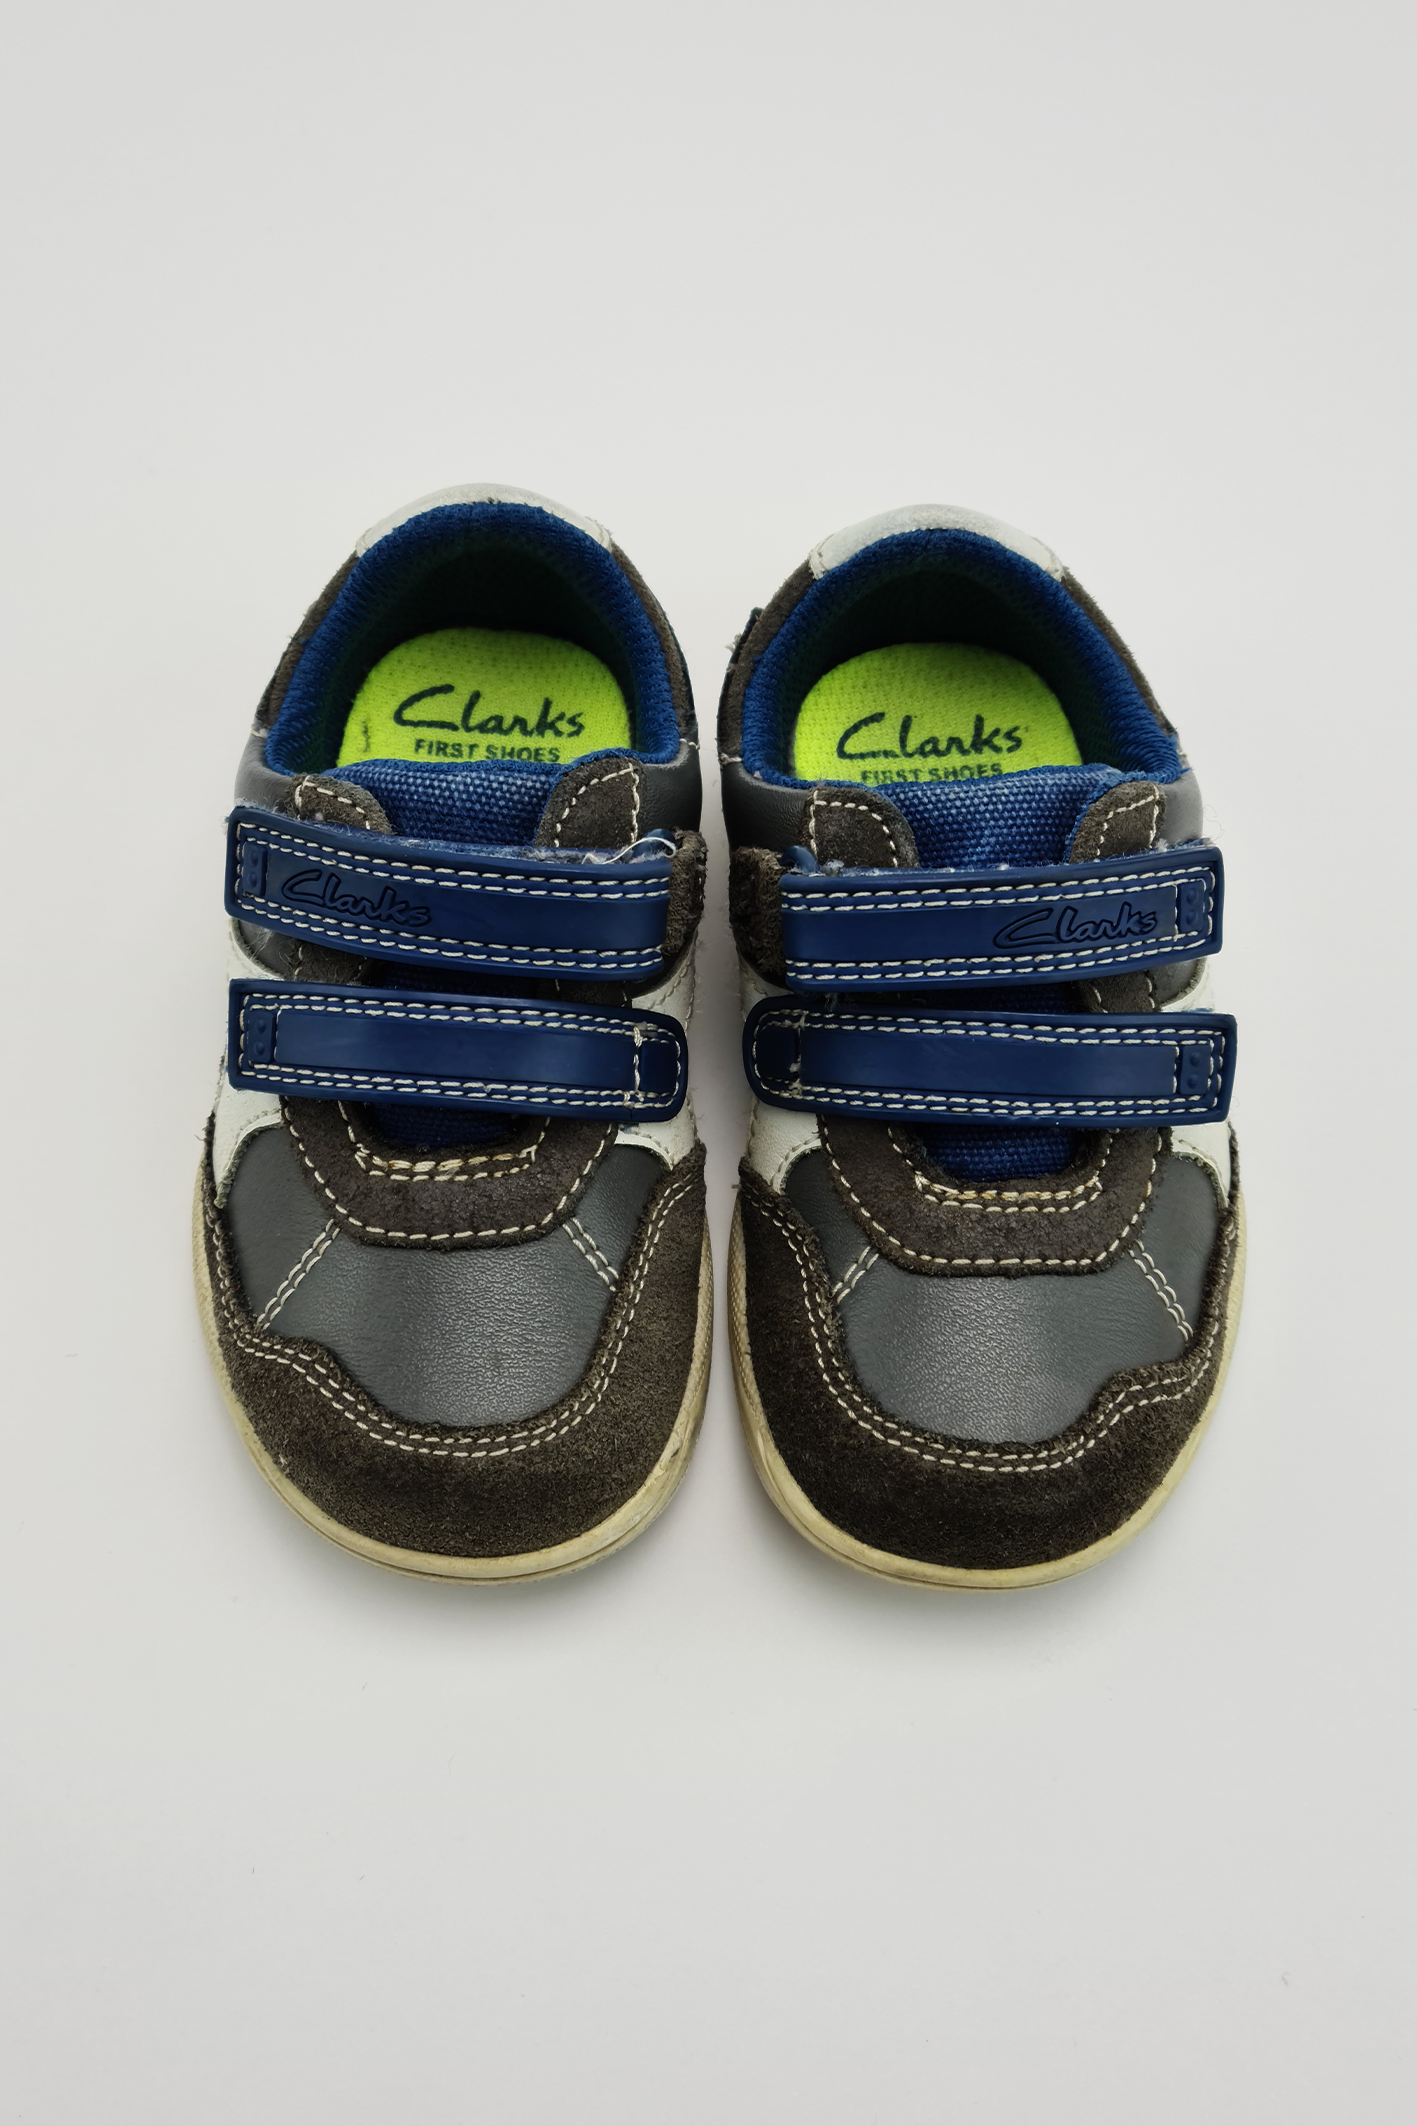 Taille 4,5 - Chaussures grises et bleues (Clarks)